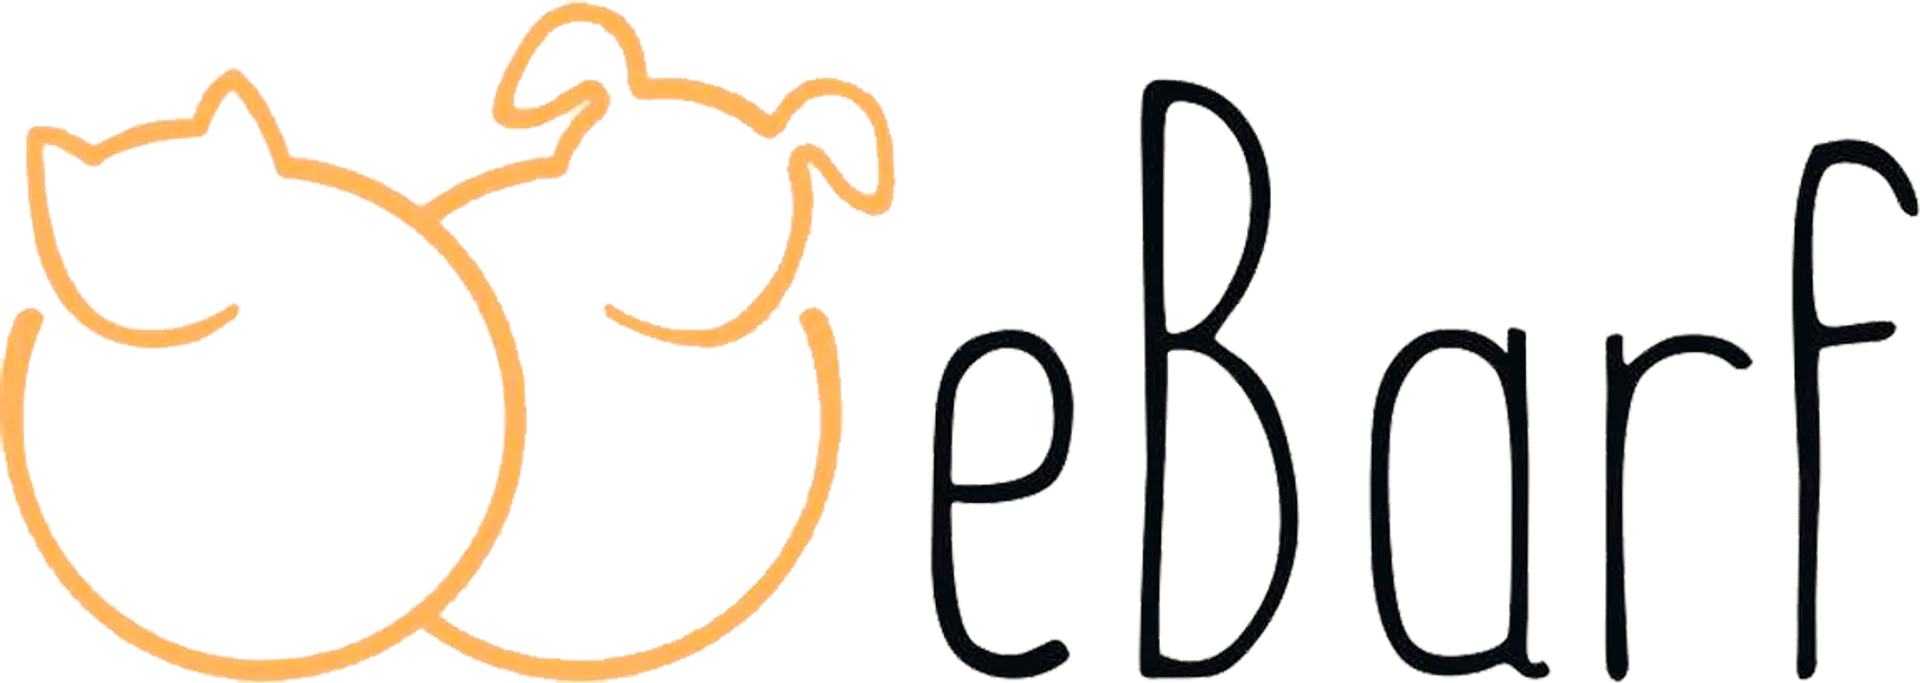 EBARF logo